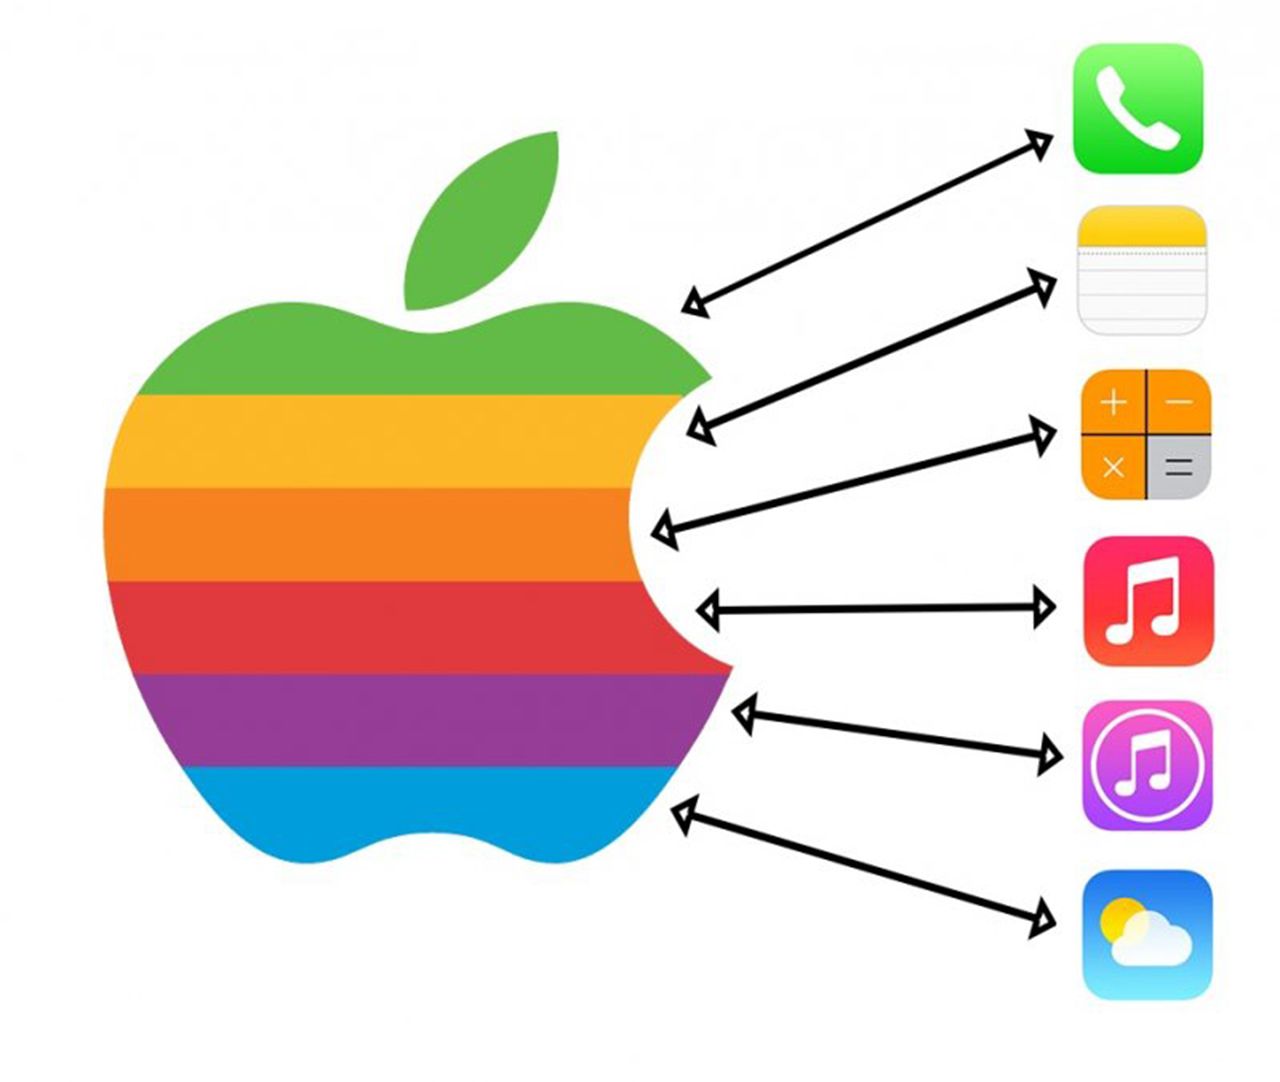 ios 7 colour scheme draws on apple s classic logo image 1